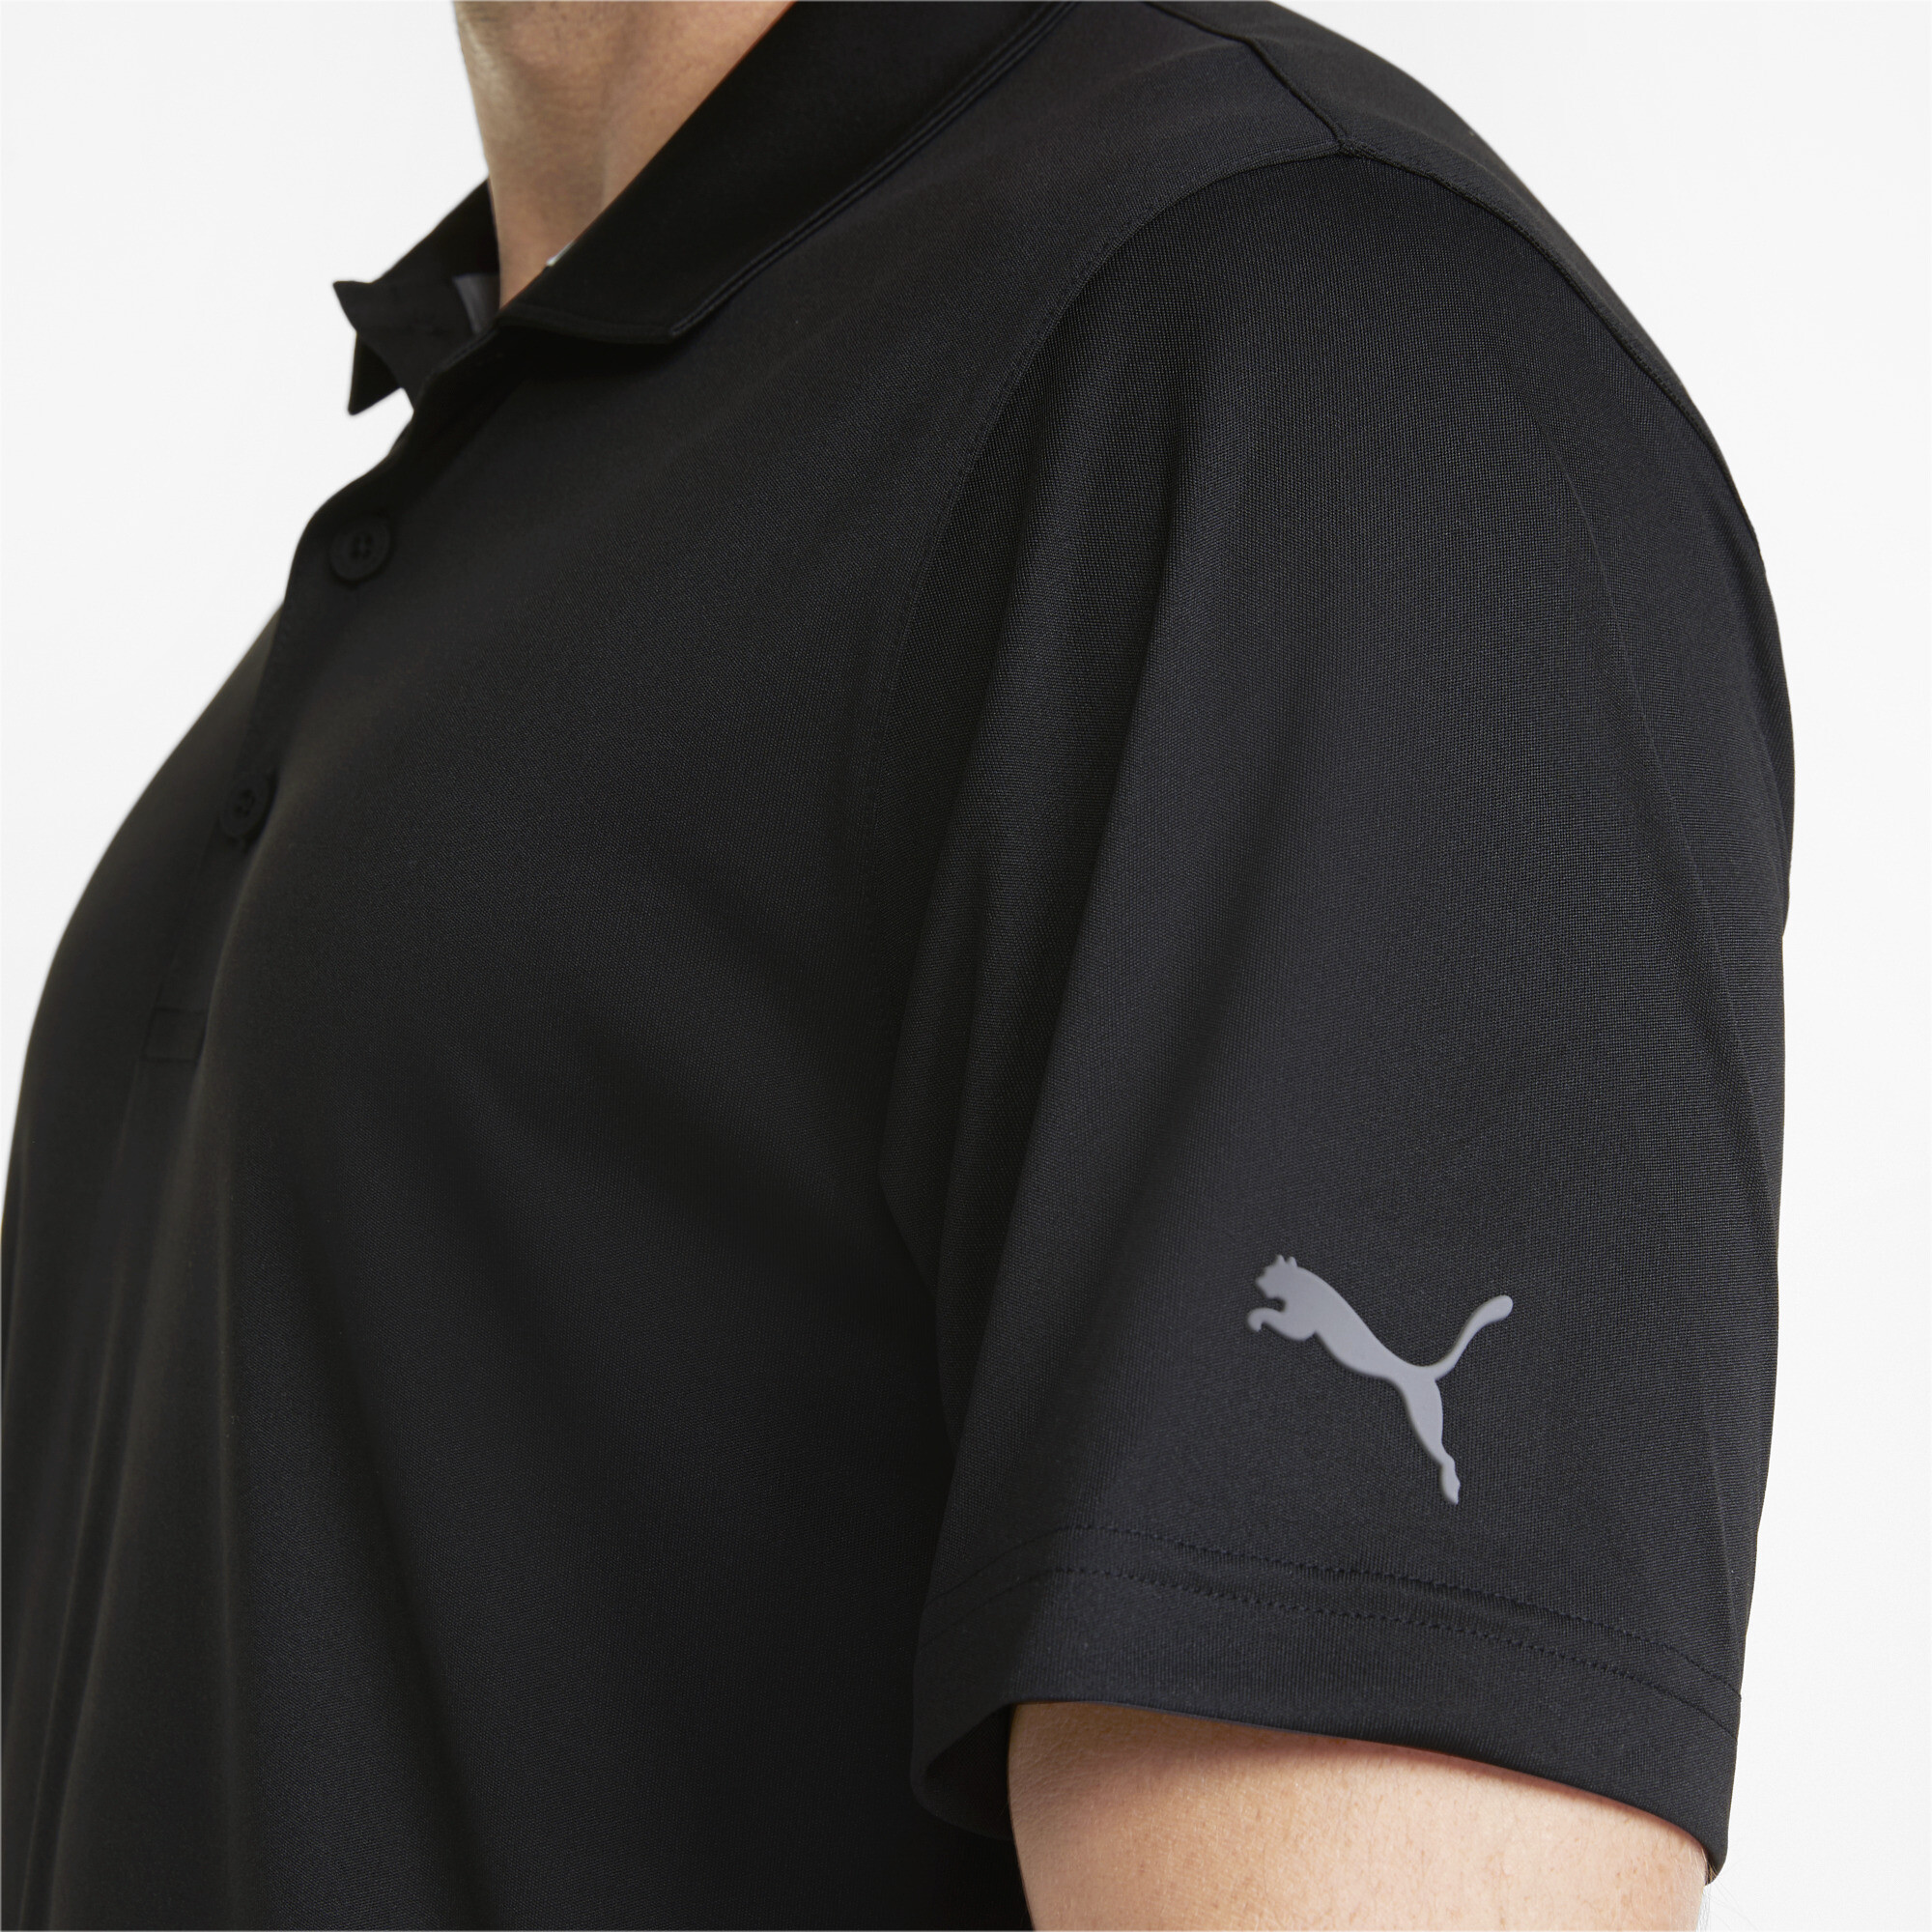 Men's Puma Gamer's Golf Polo Shirt T-Shirt, Black T-Shirt, Size 3XL T-Shirt, Clothing